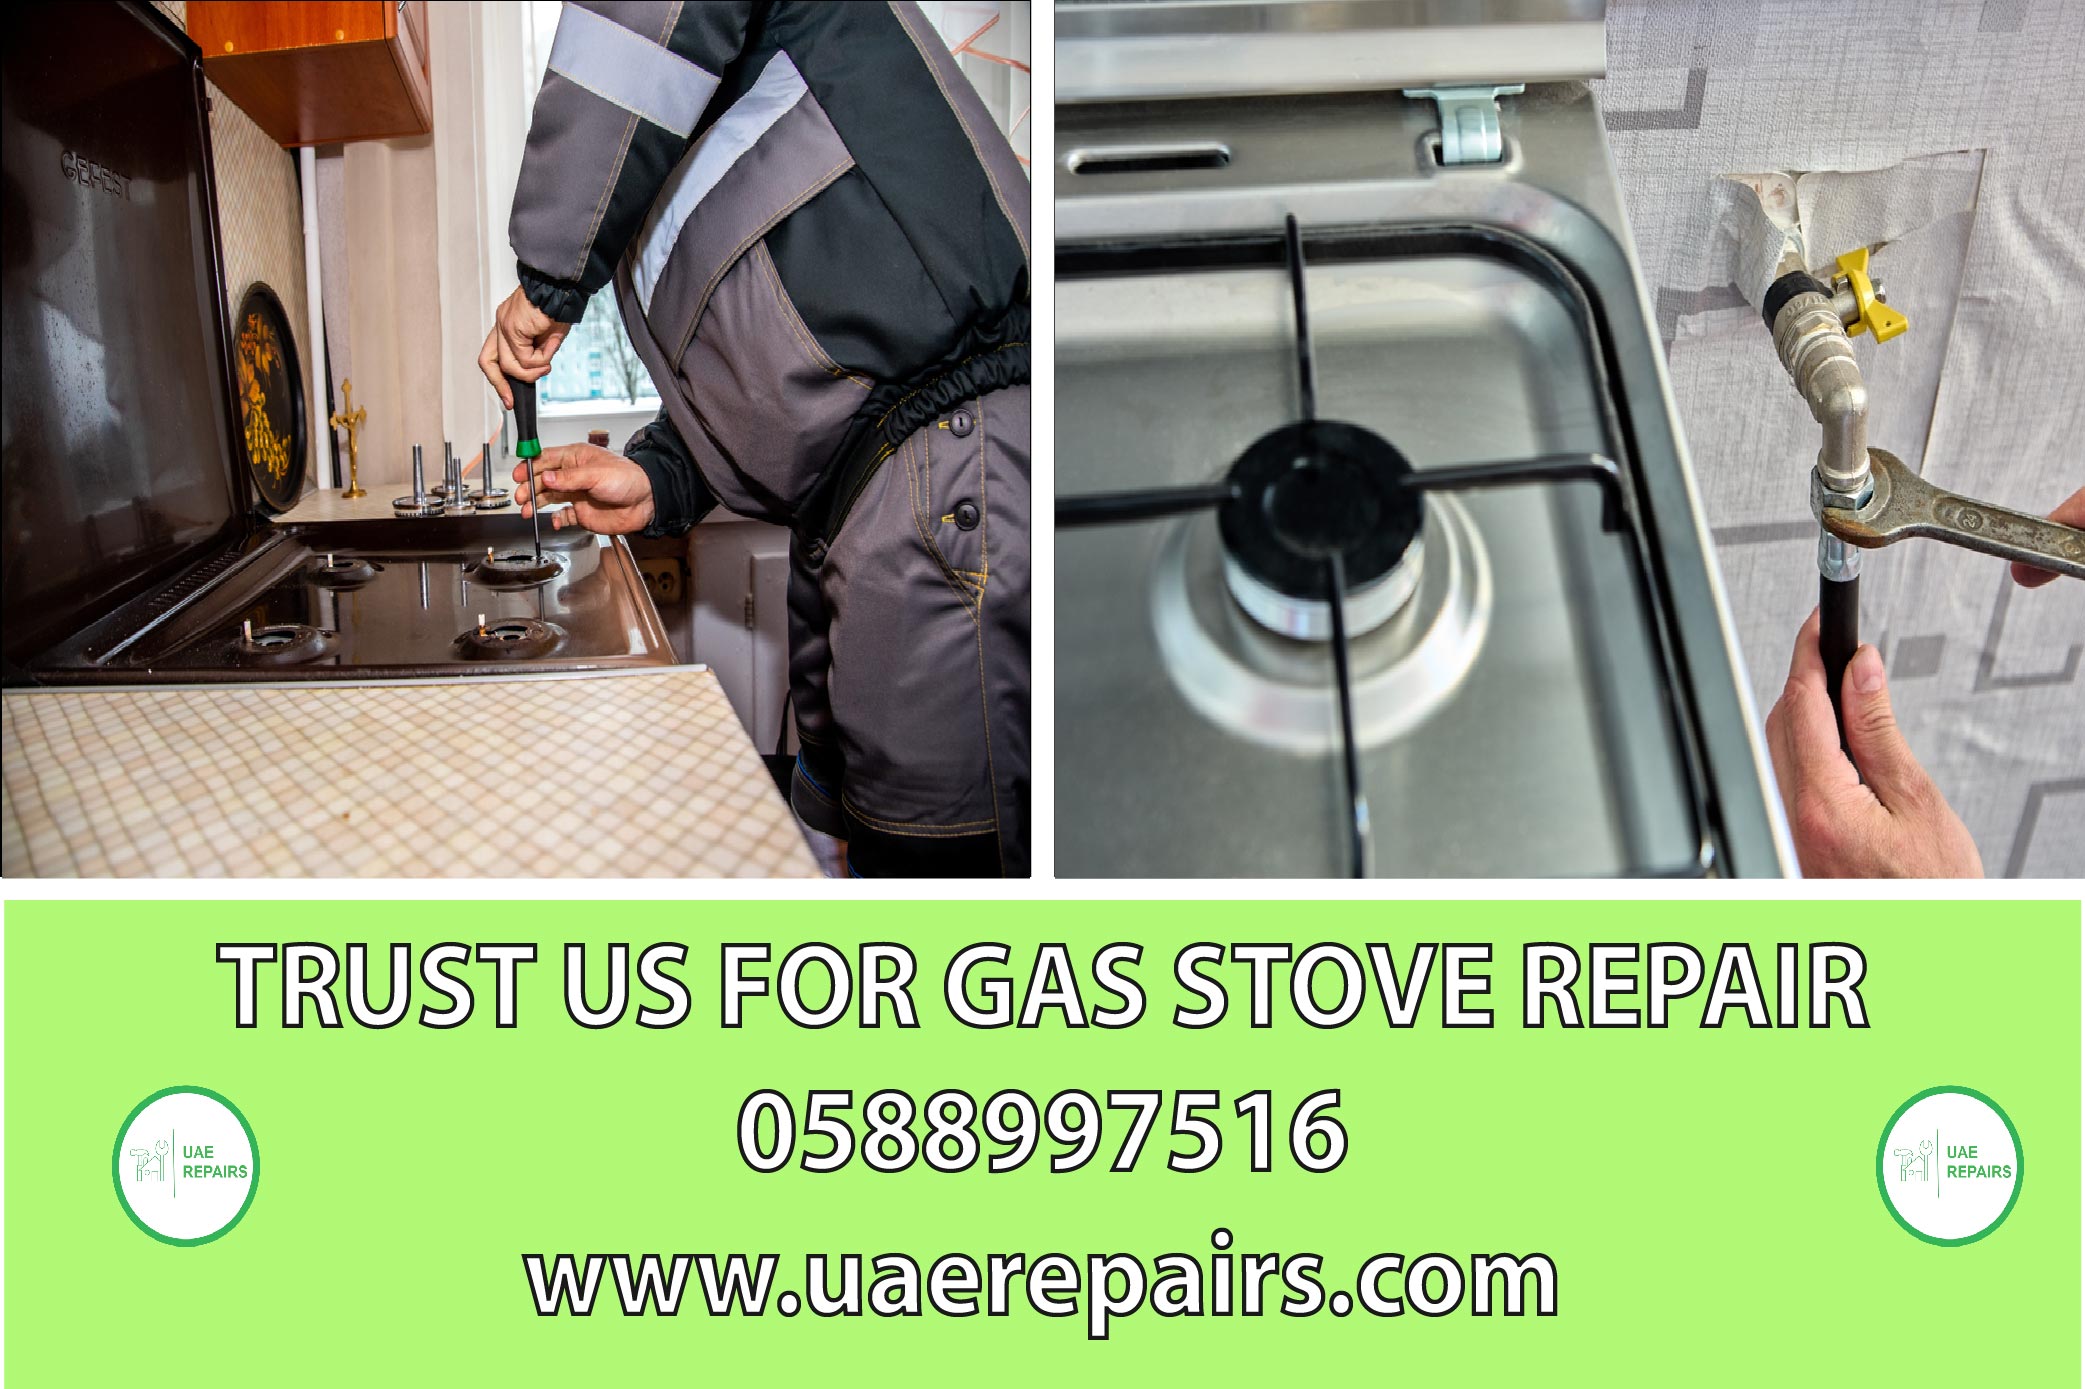 Why Trust UAE REPAIRS for Gas Stove Repair UAE CONTACT US 0588997516